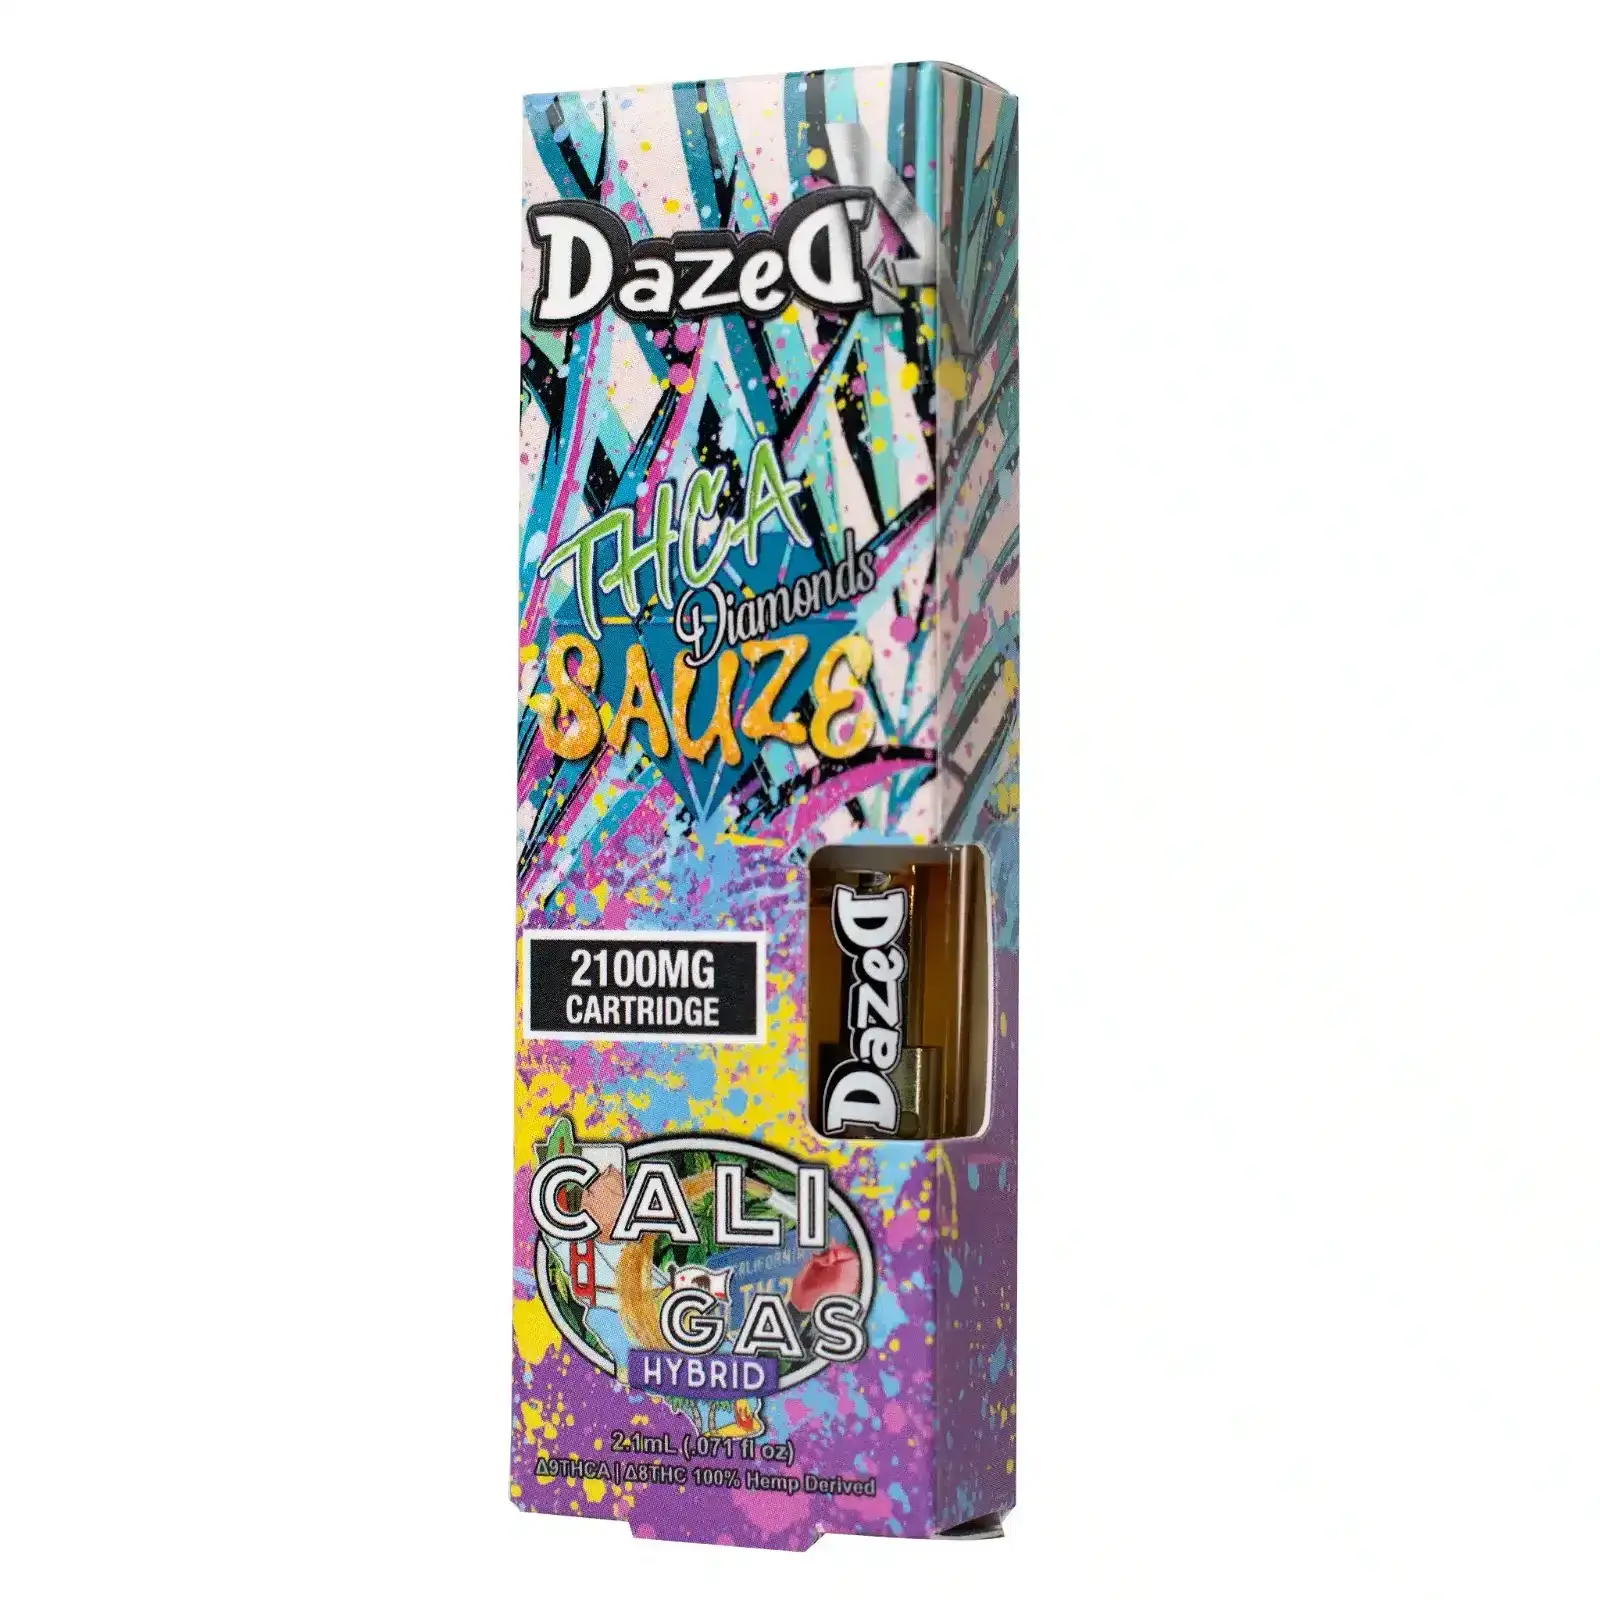 Image of DazedA THCA Diamonds Sauze Vape Cartridge Cali Gas 2.1g